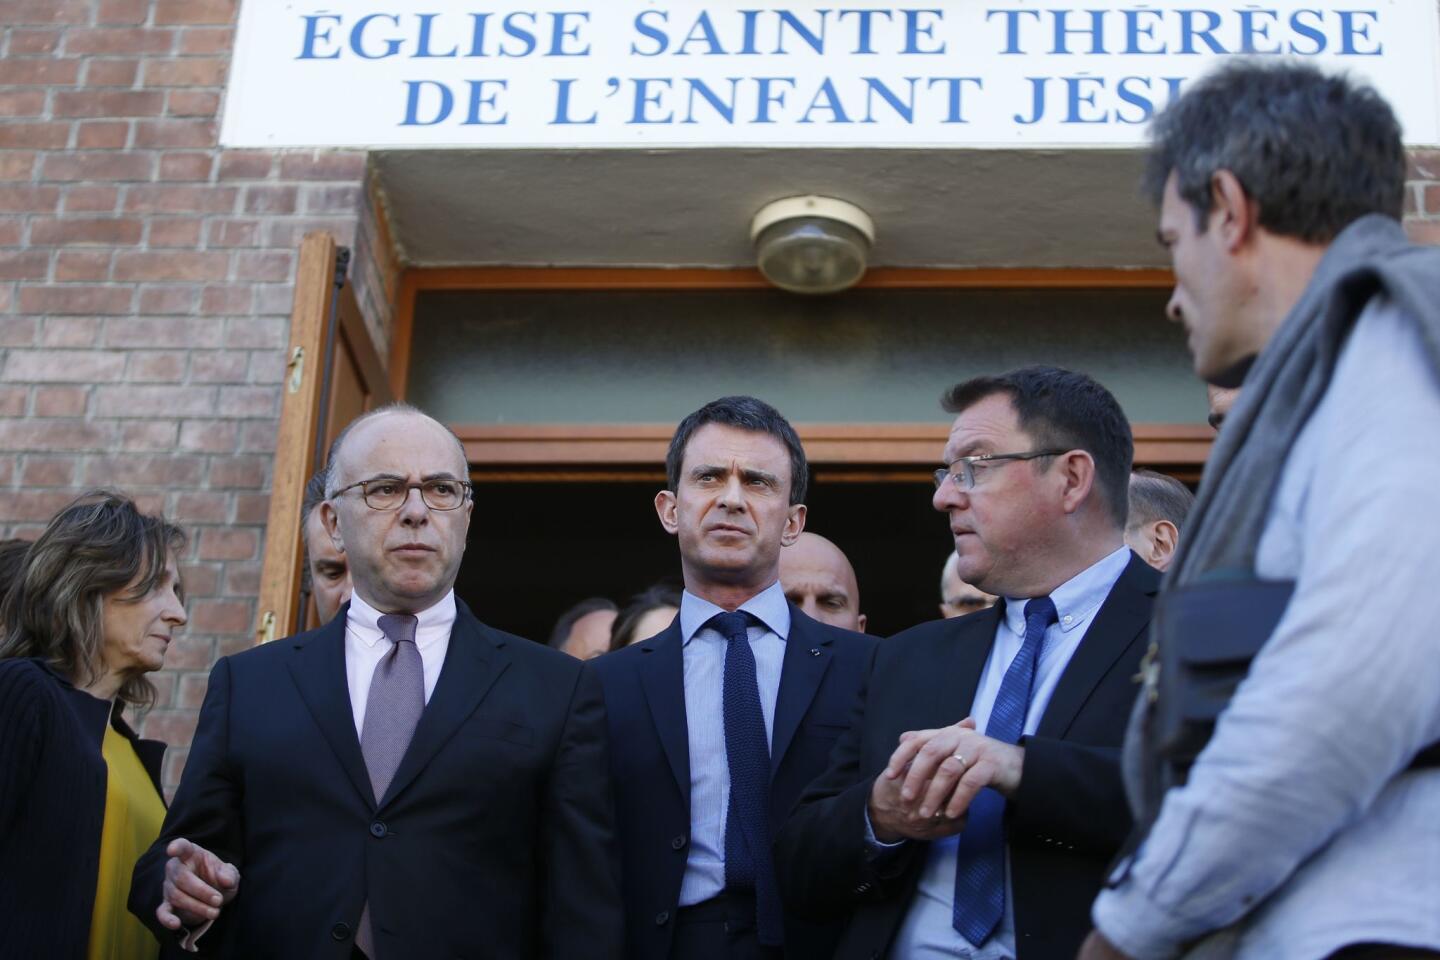 French Prime Minister Manuel Valls (C) and French Interior Minister Bernard Cazeneuve (L) and Villejuif's Mayor Franck Le Bohellec leave the Sainte Therese de l'Enfant Jesus.